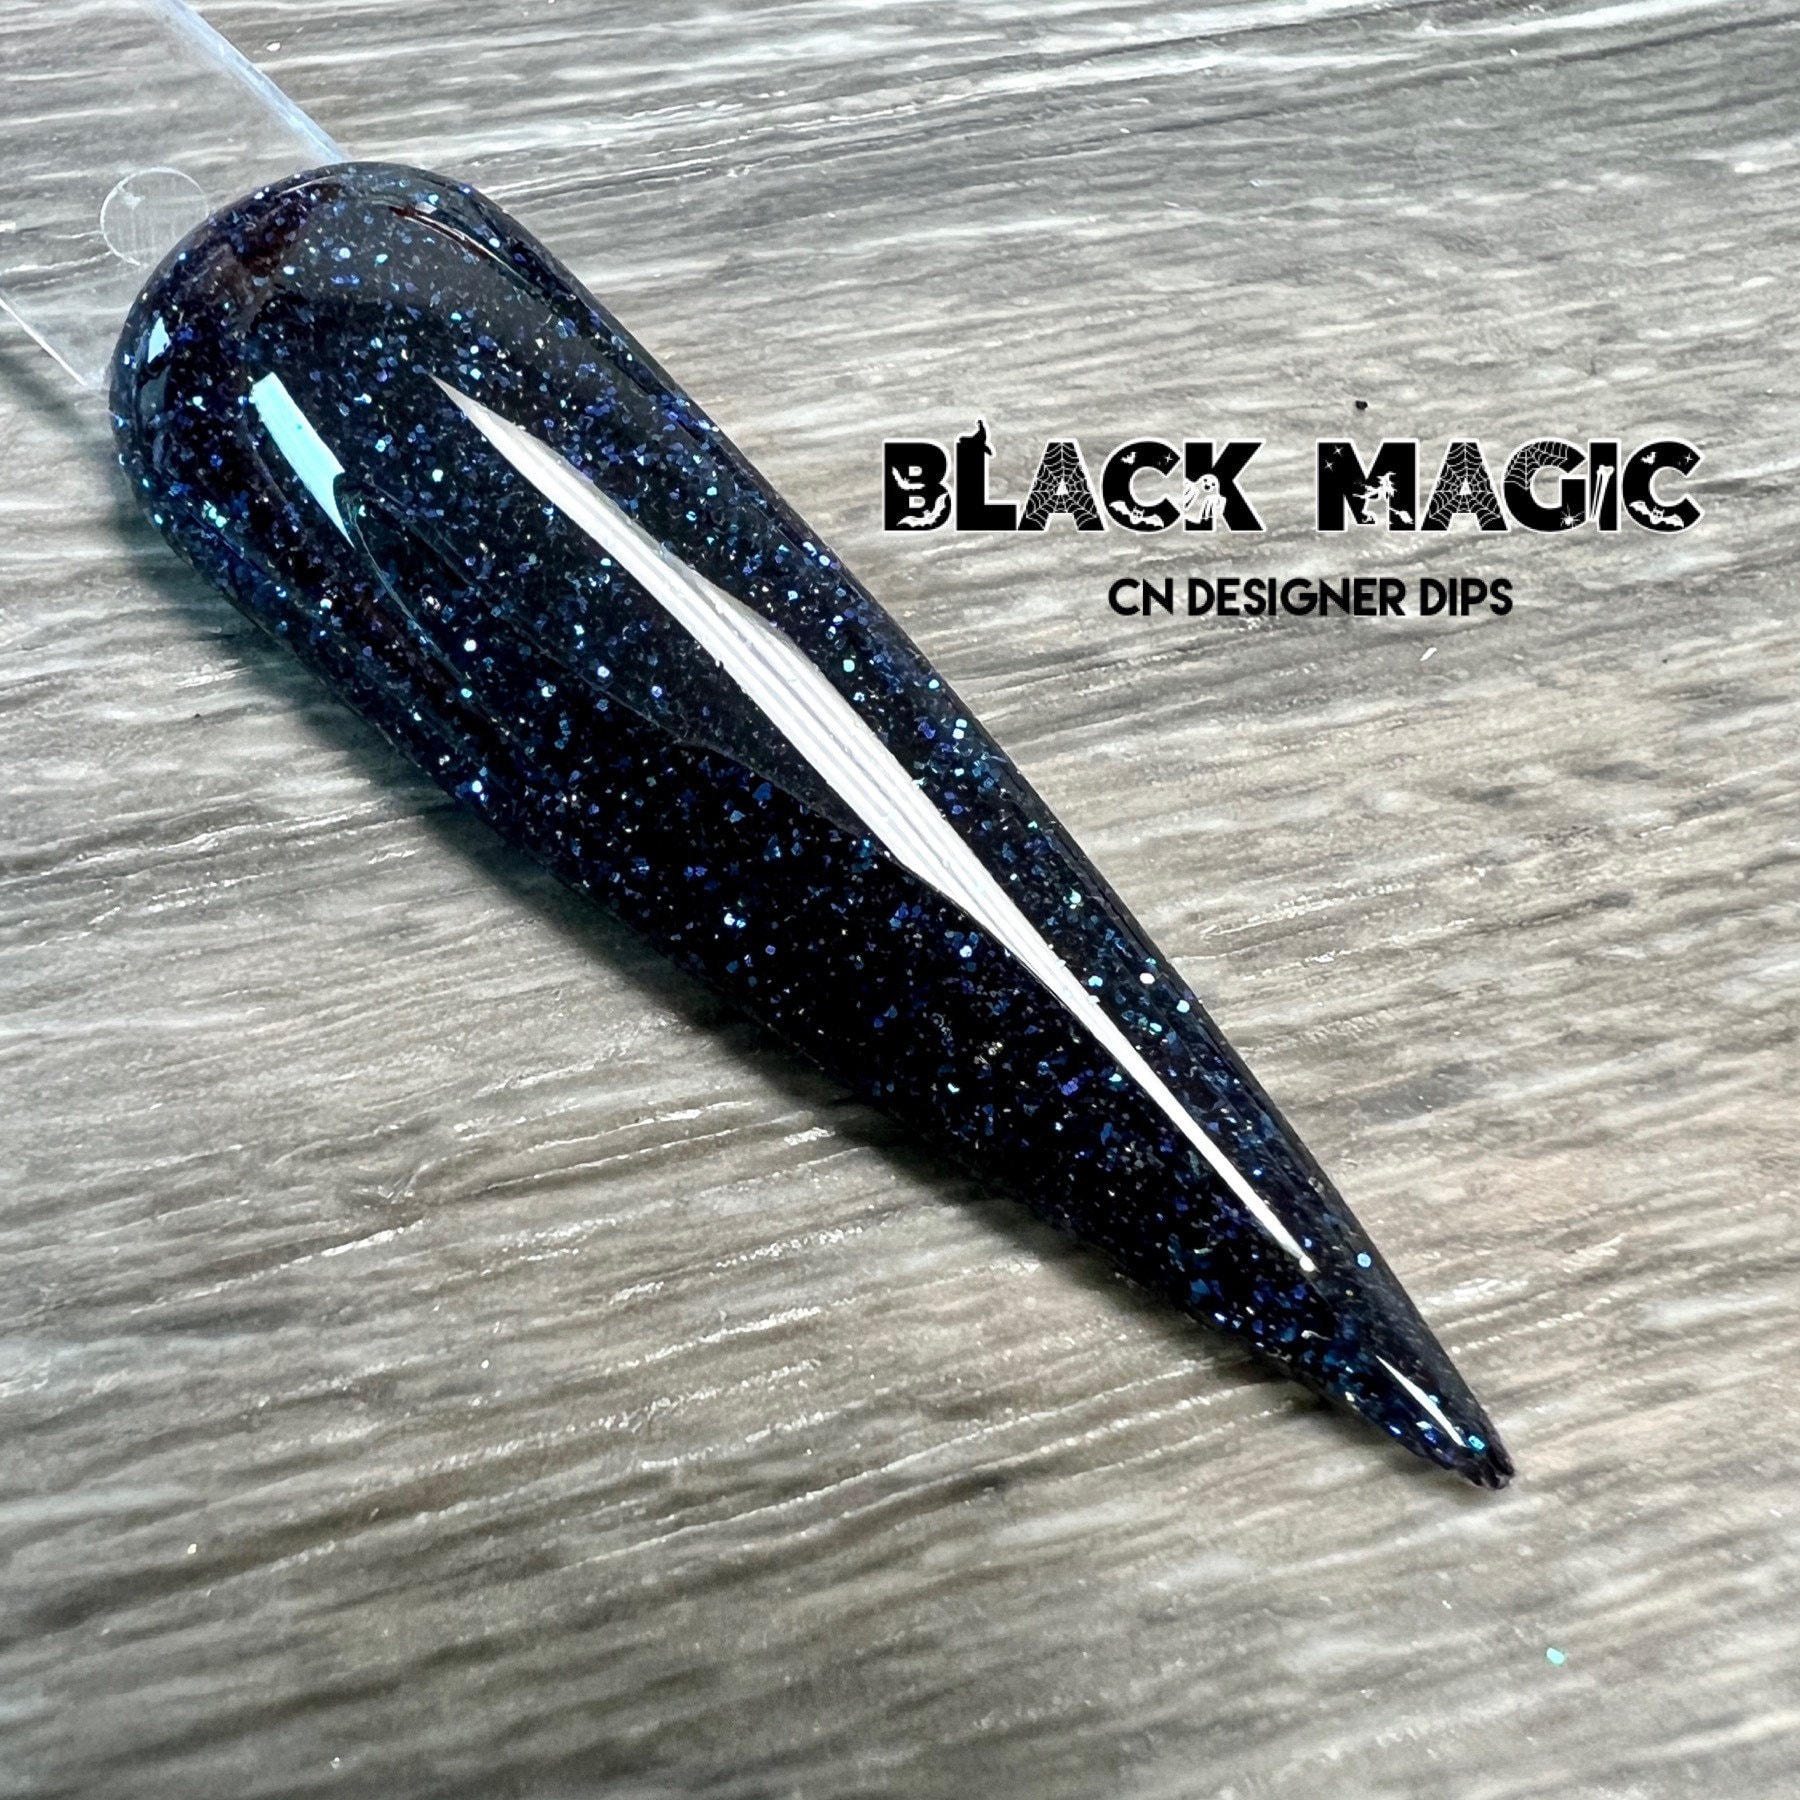 Black Magic - Dip-Puder, Dip-Puder Für Nägel, Nagel-Dip-Puder, Nagel-Dip, Dip-Nagel-Puder, Halloween, Acryl, Nägel von Etsy - CNDesignerDips